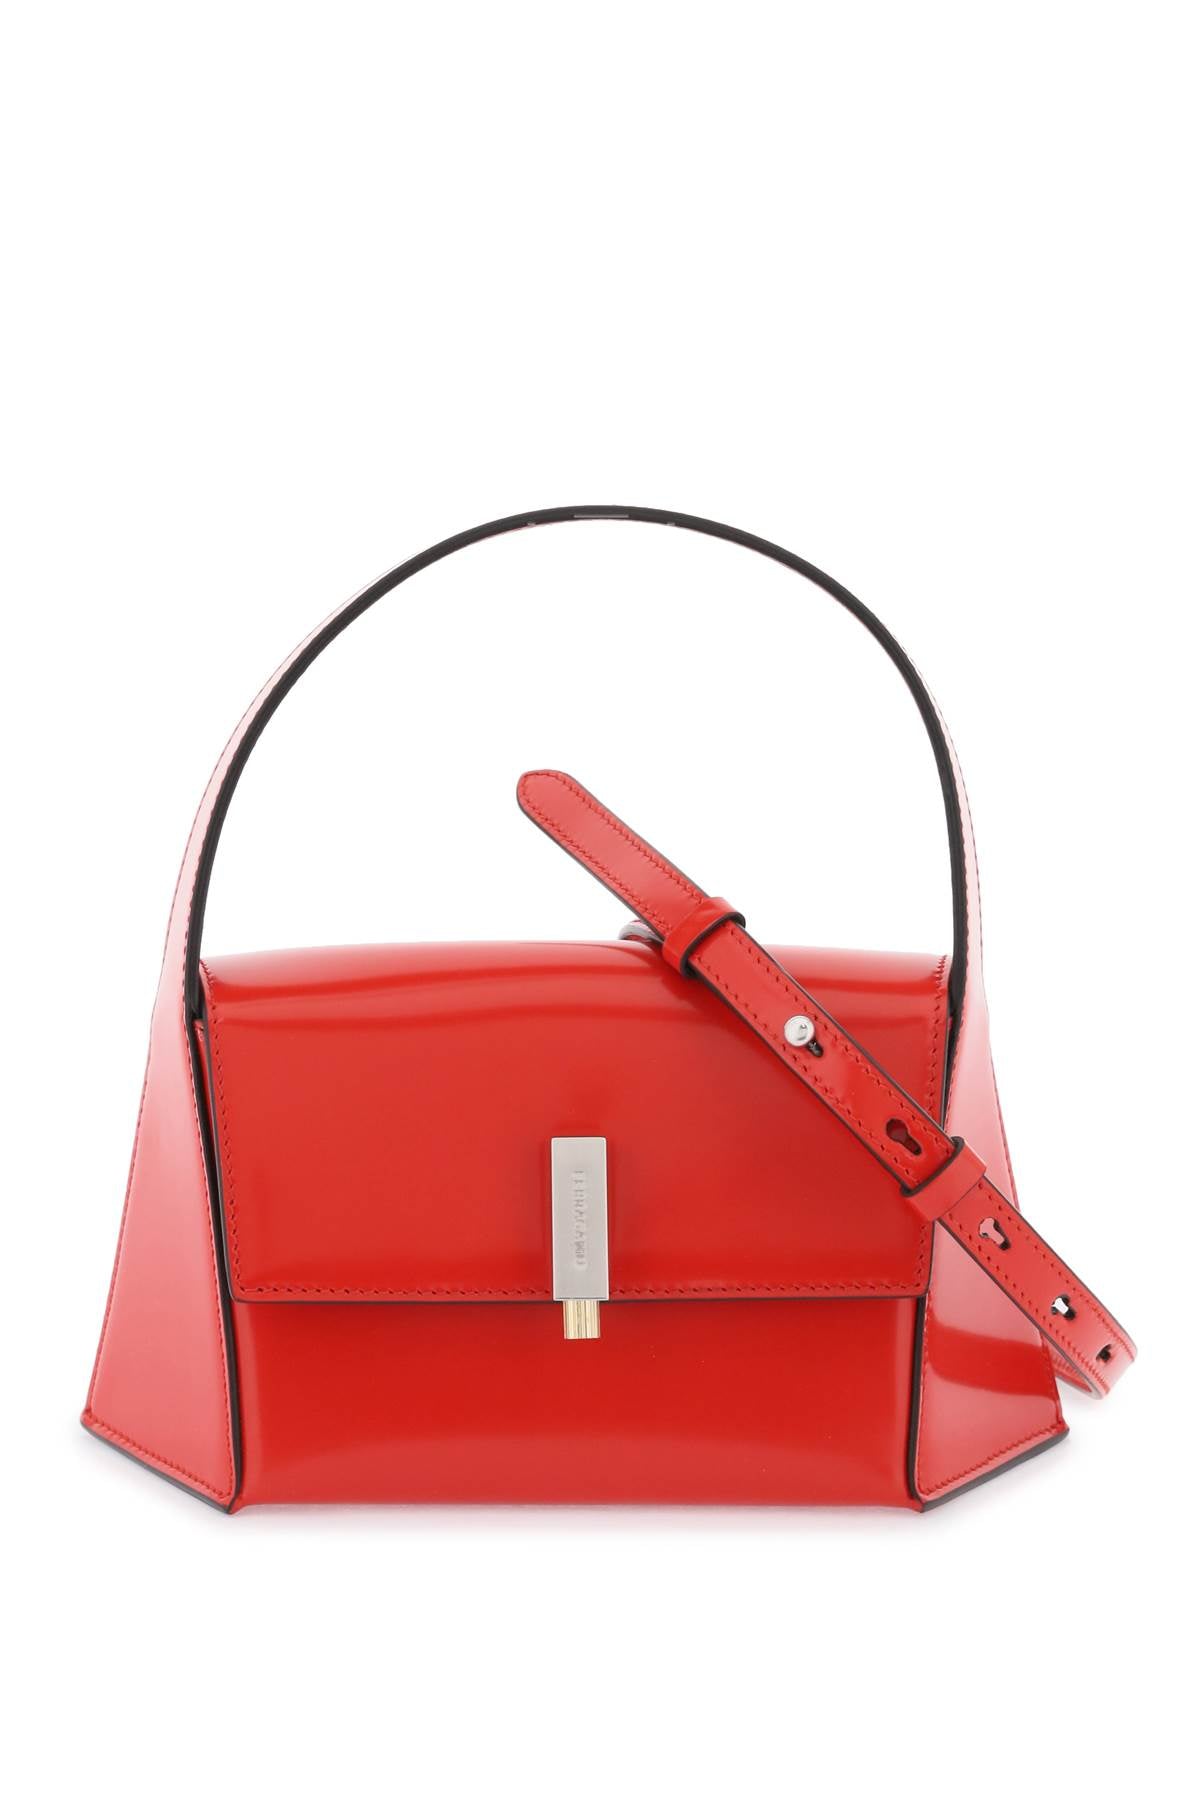 Shop Ferragamo Geometric Red Leather Handbag For Women